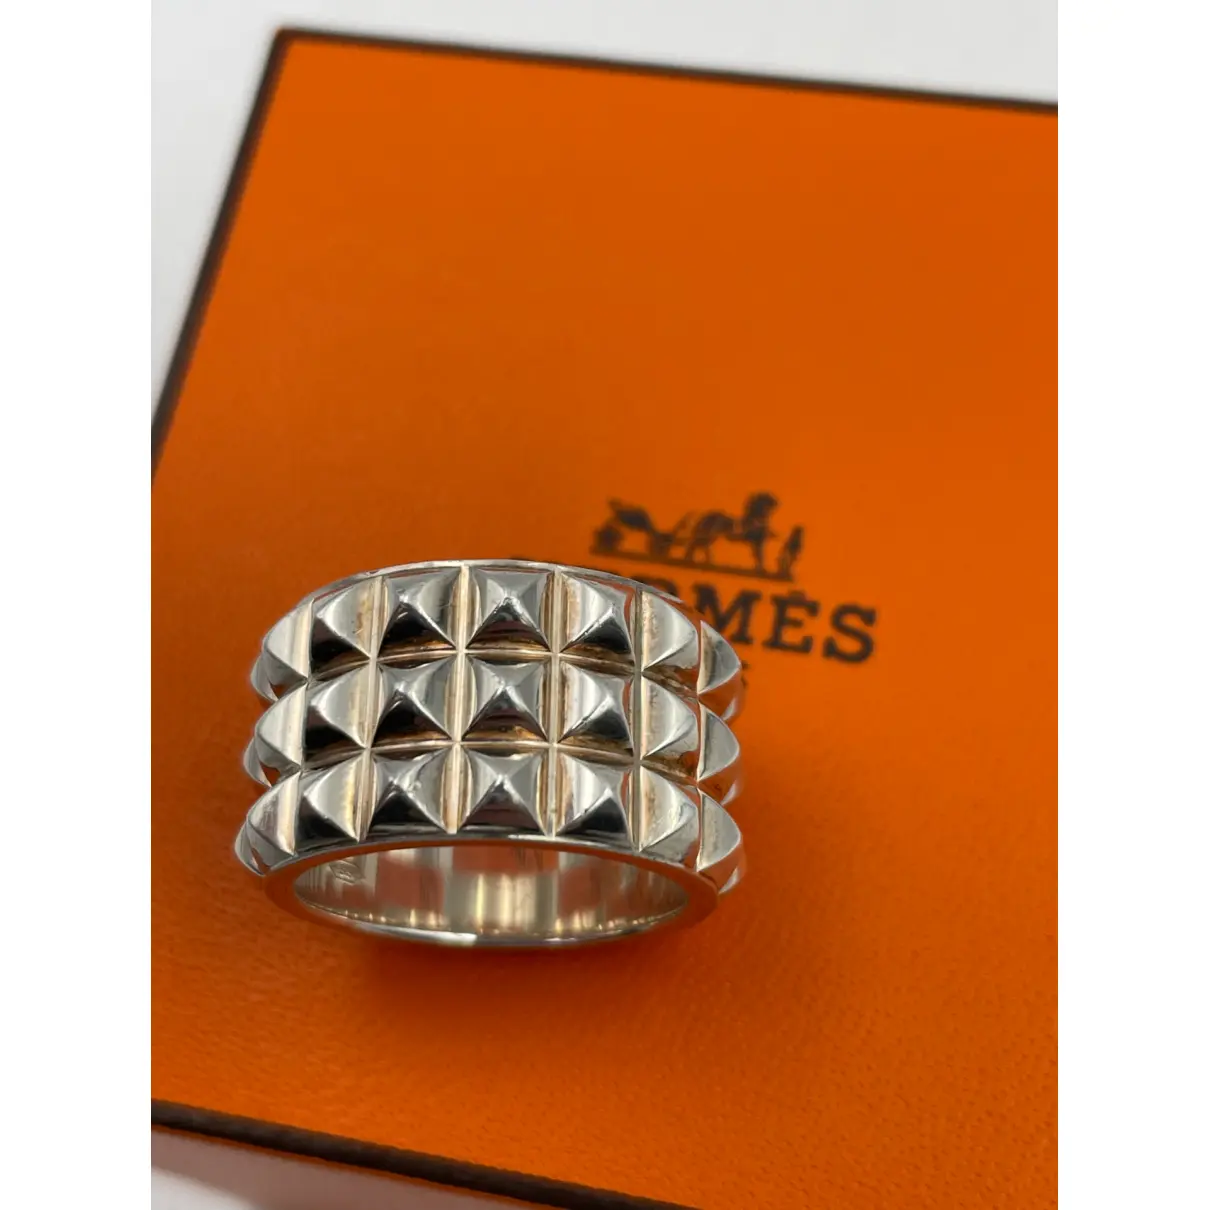 Collier de chien silver ring Hermès